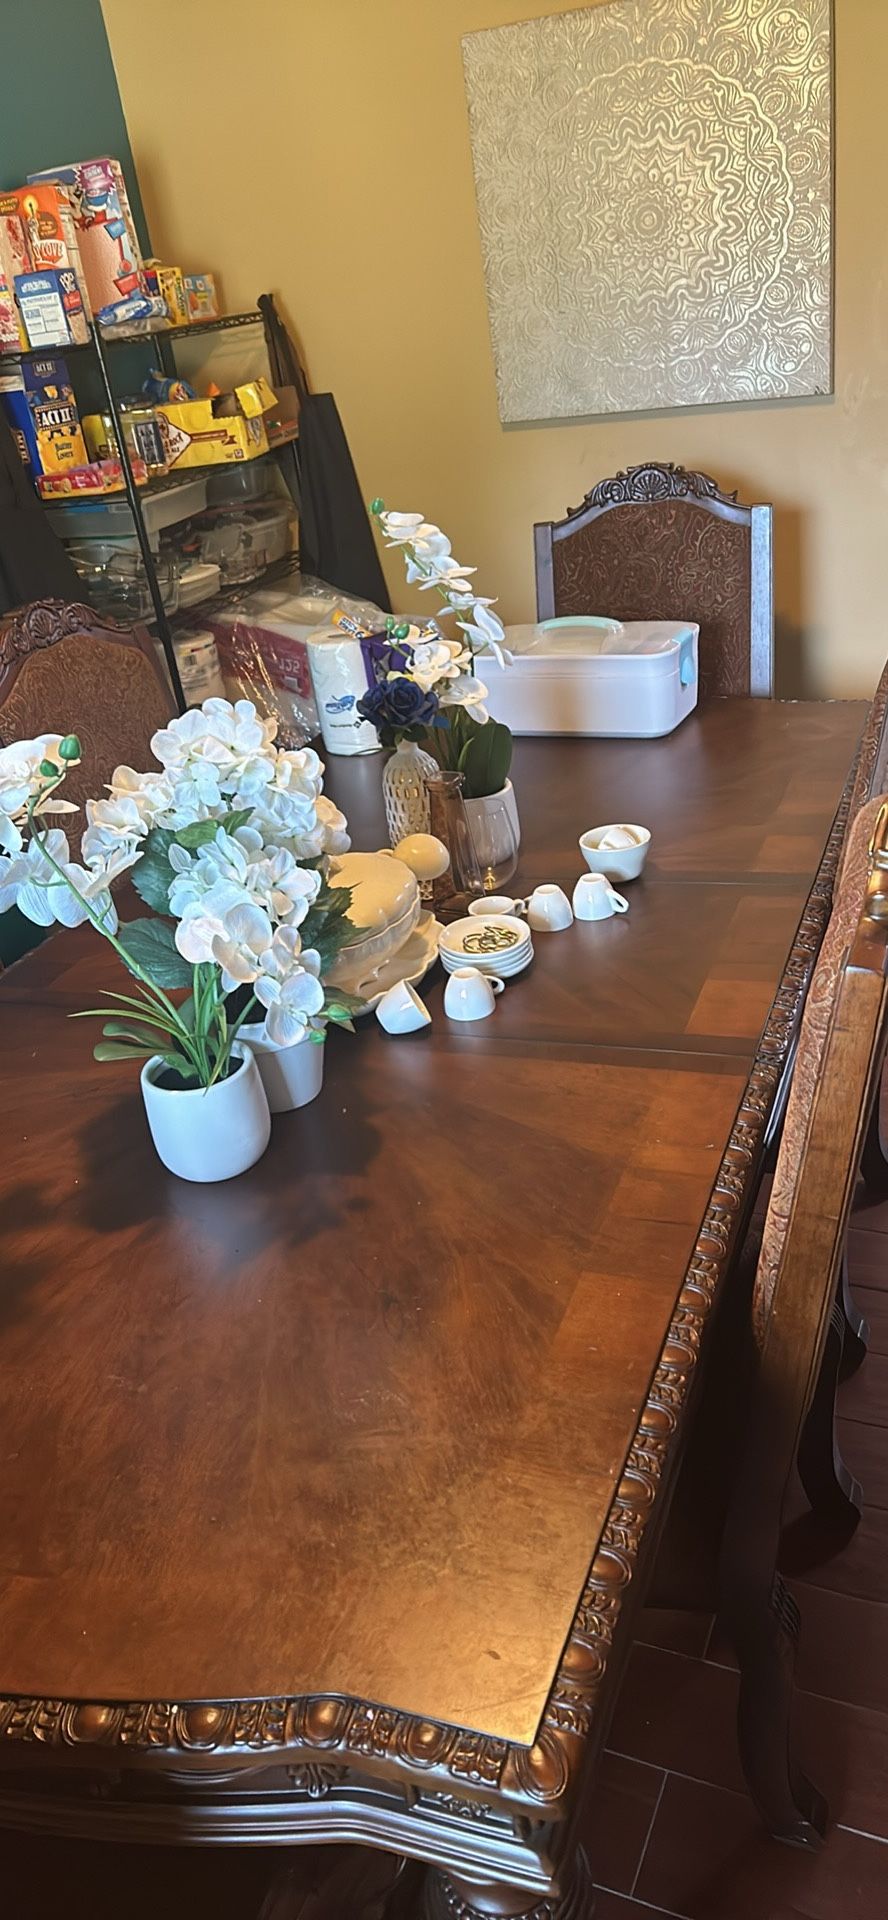 6 Seat Solid Oak Dinner Table 